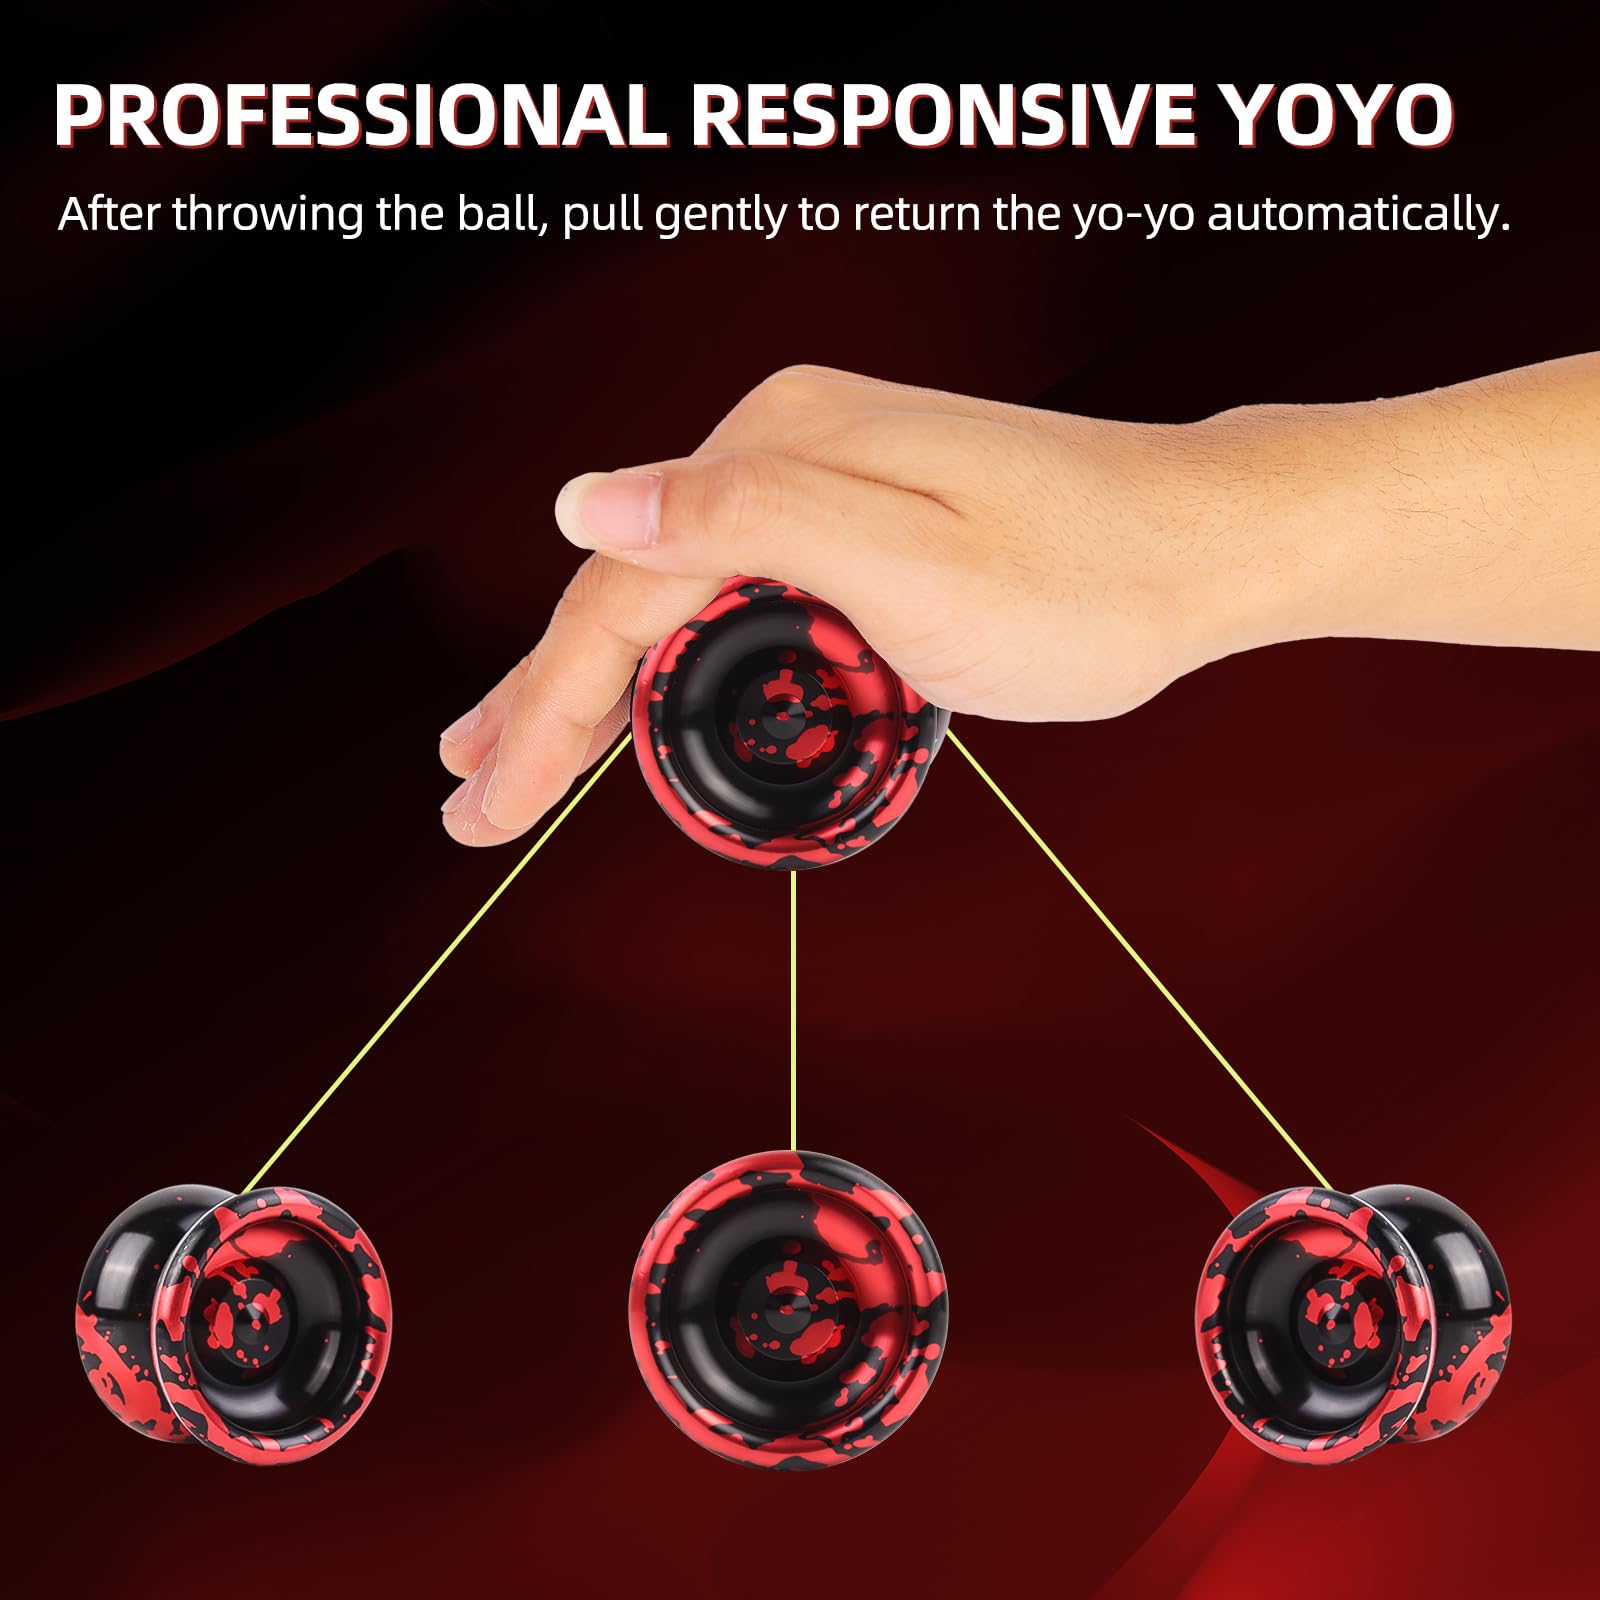 Responsive Yoyo for Kids,Aluminum Alloy Metal Yoyo Ball for Beginners and Professional Players+Yoyo Bag+ 5 Yoyo Strings